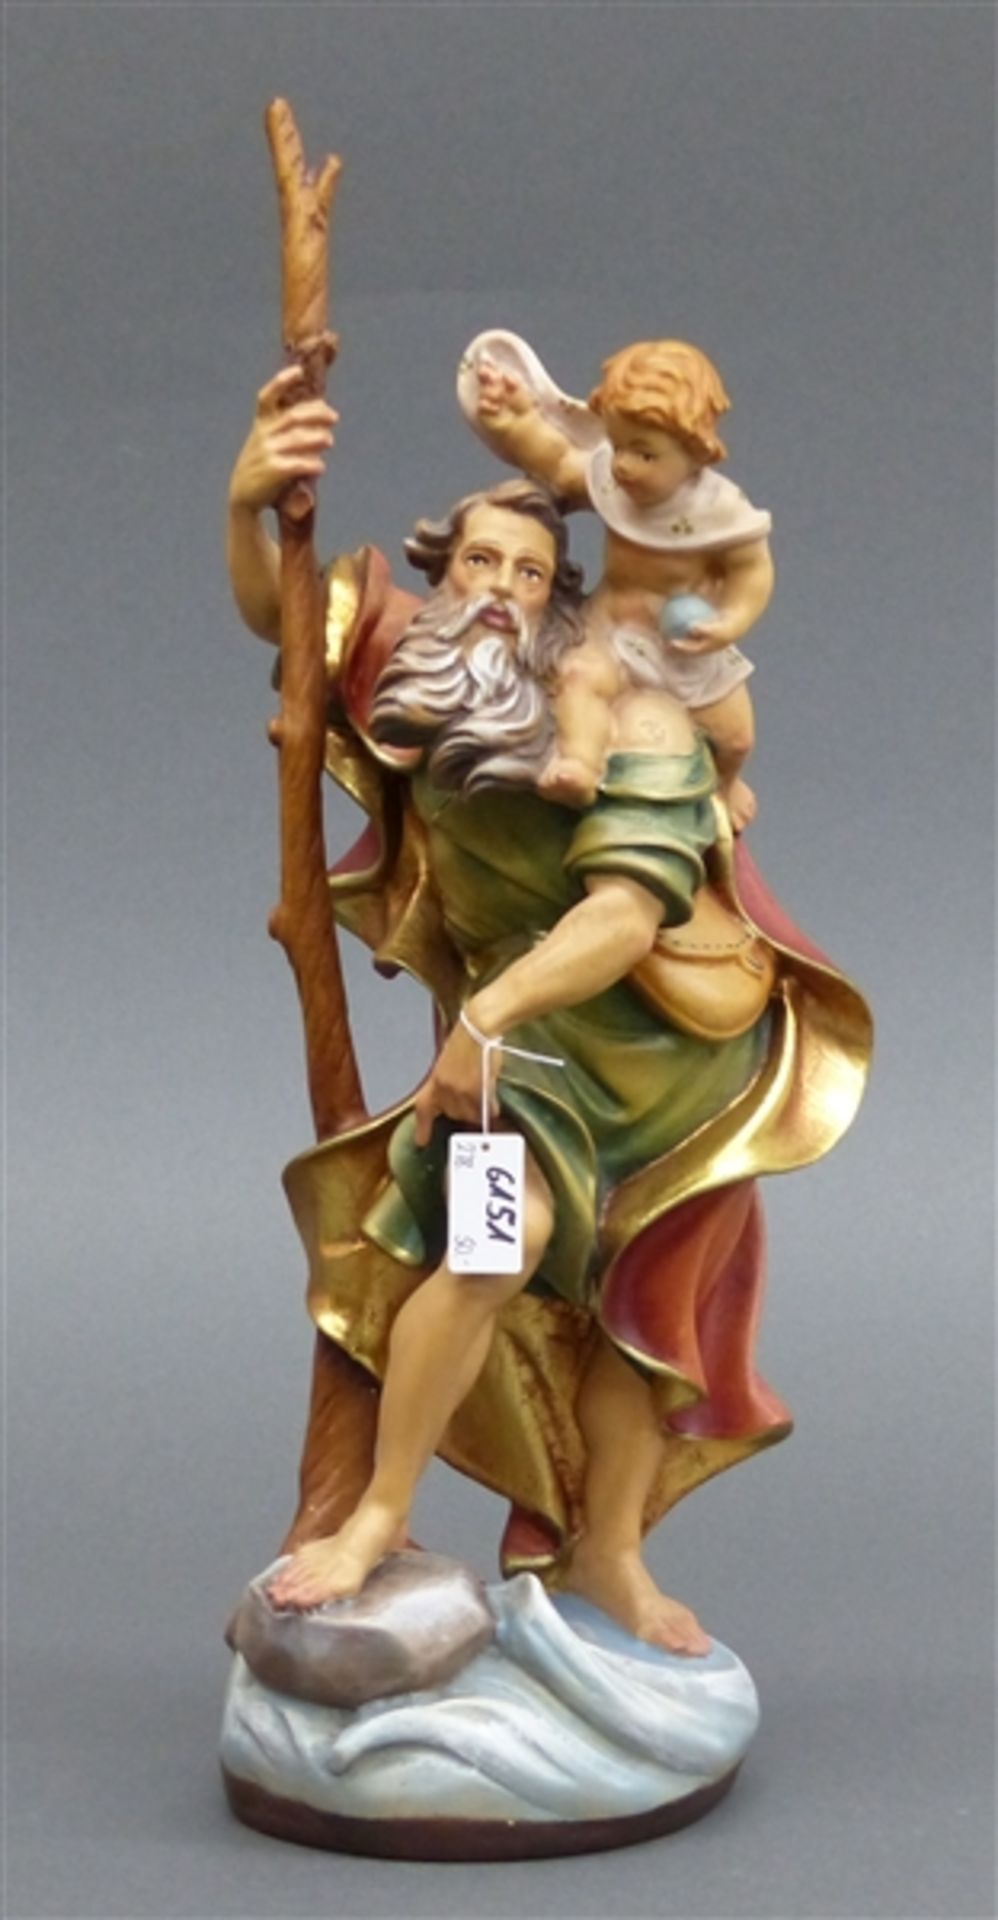 Holzskulptur 20. Jh. geschnitzt, gefasst, vergoldet, Heiliger Christophorus, Grödnertal, h 40 cm,